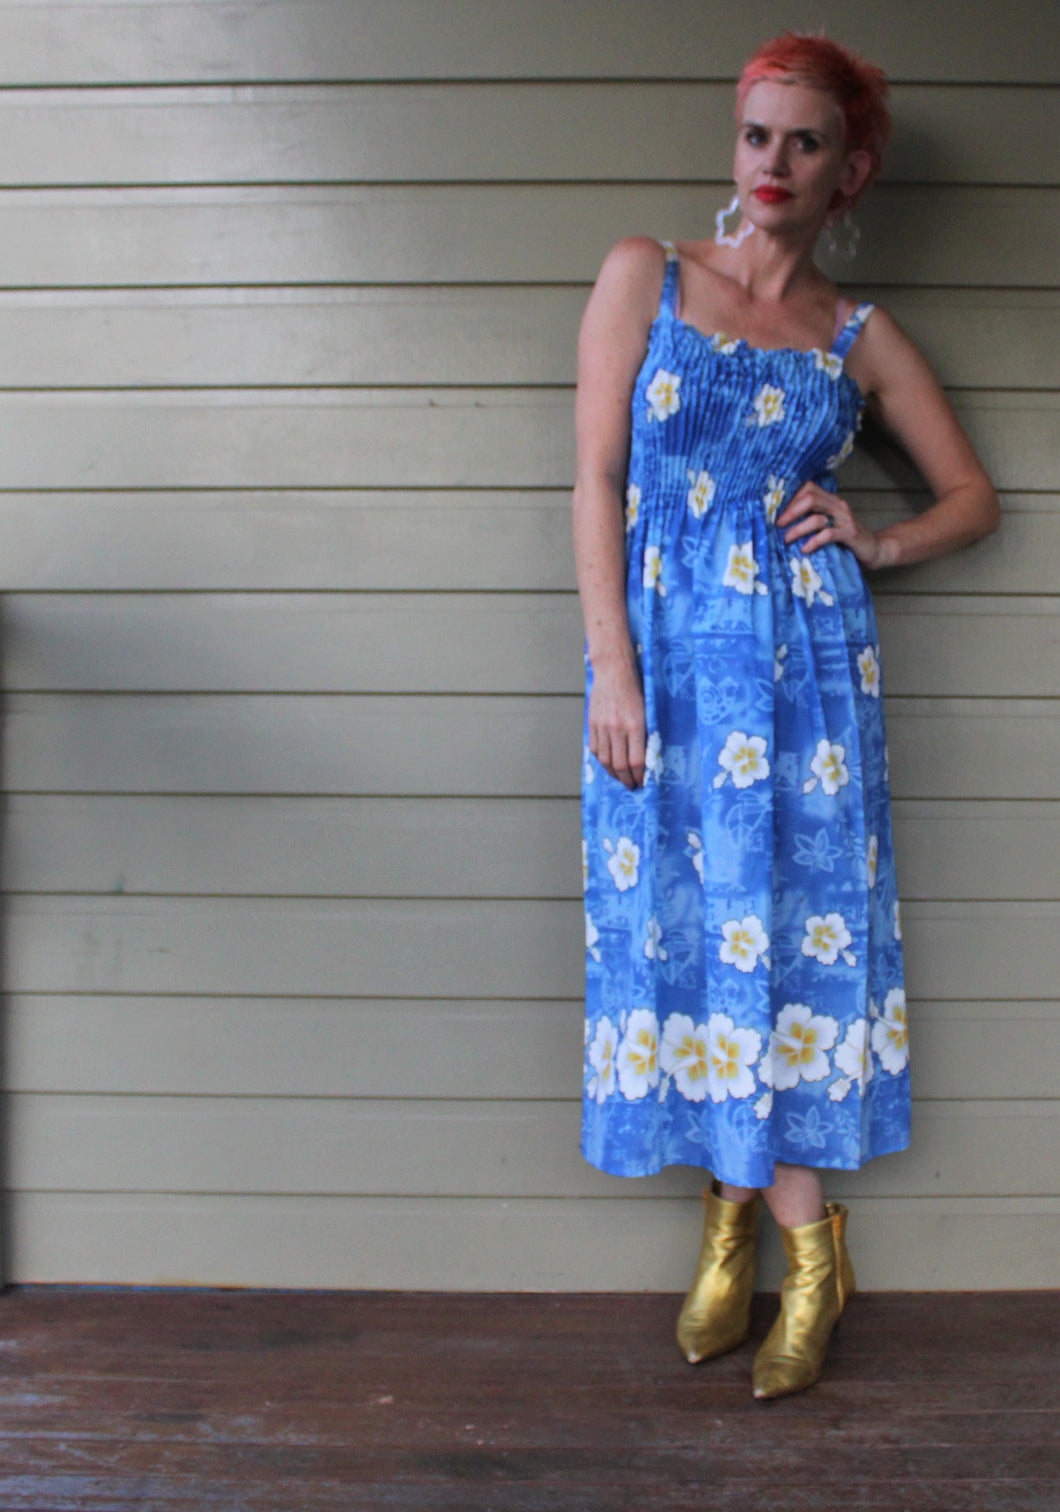 Blue Hawaiian style dress with frangipani flowers pattern